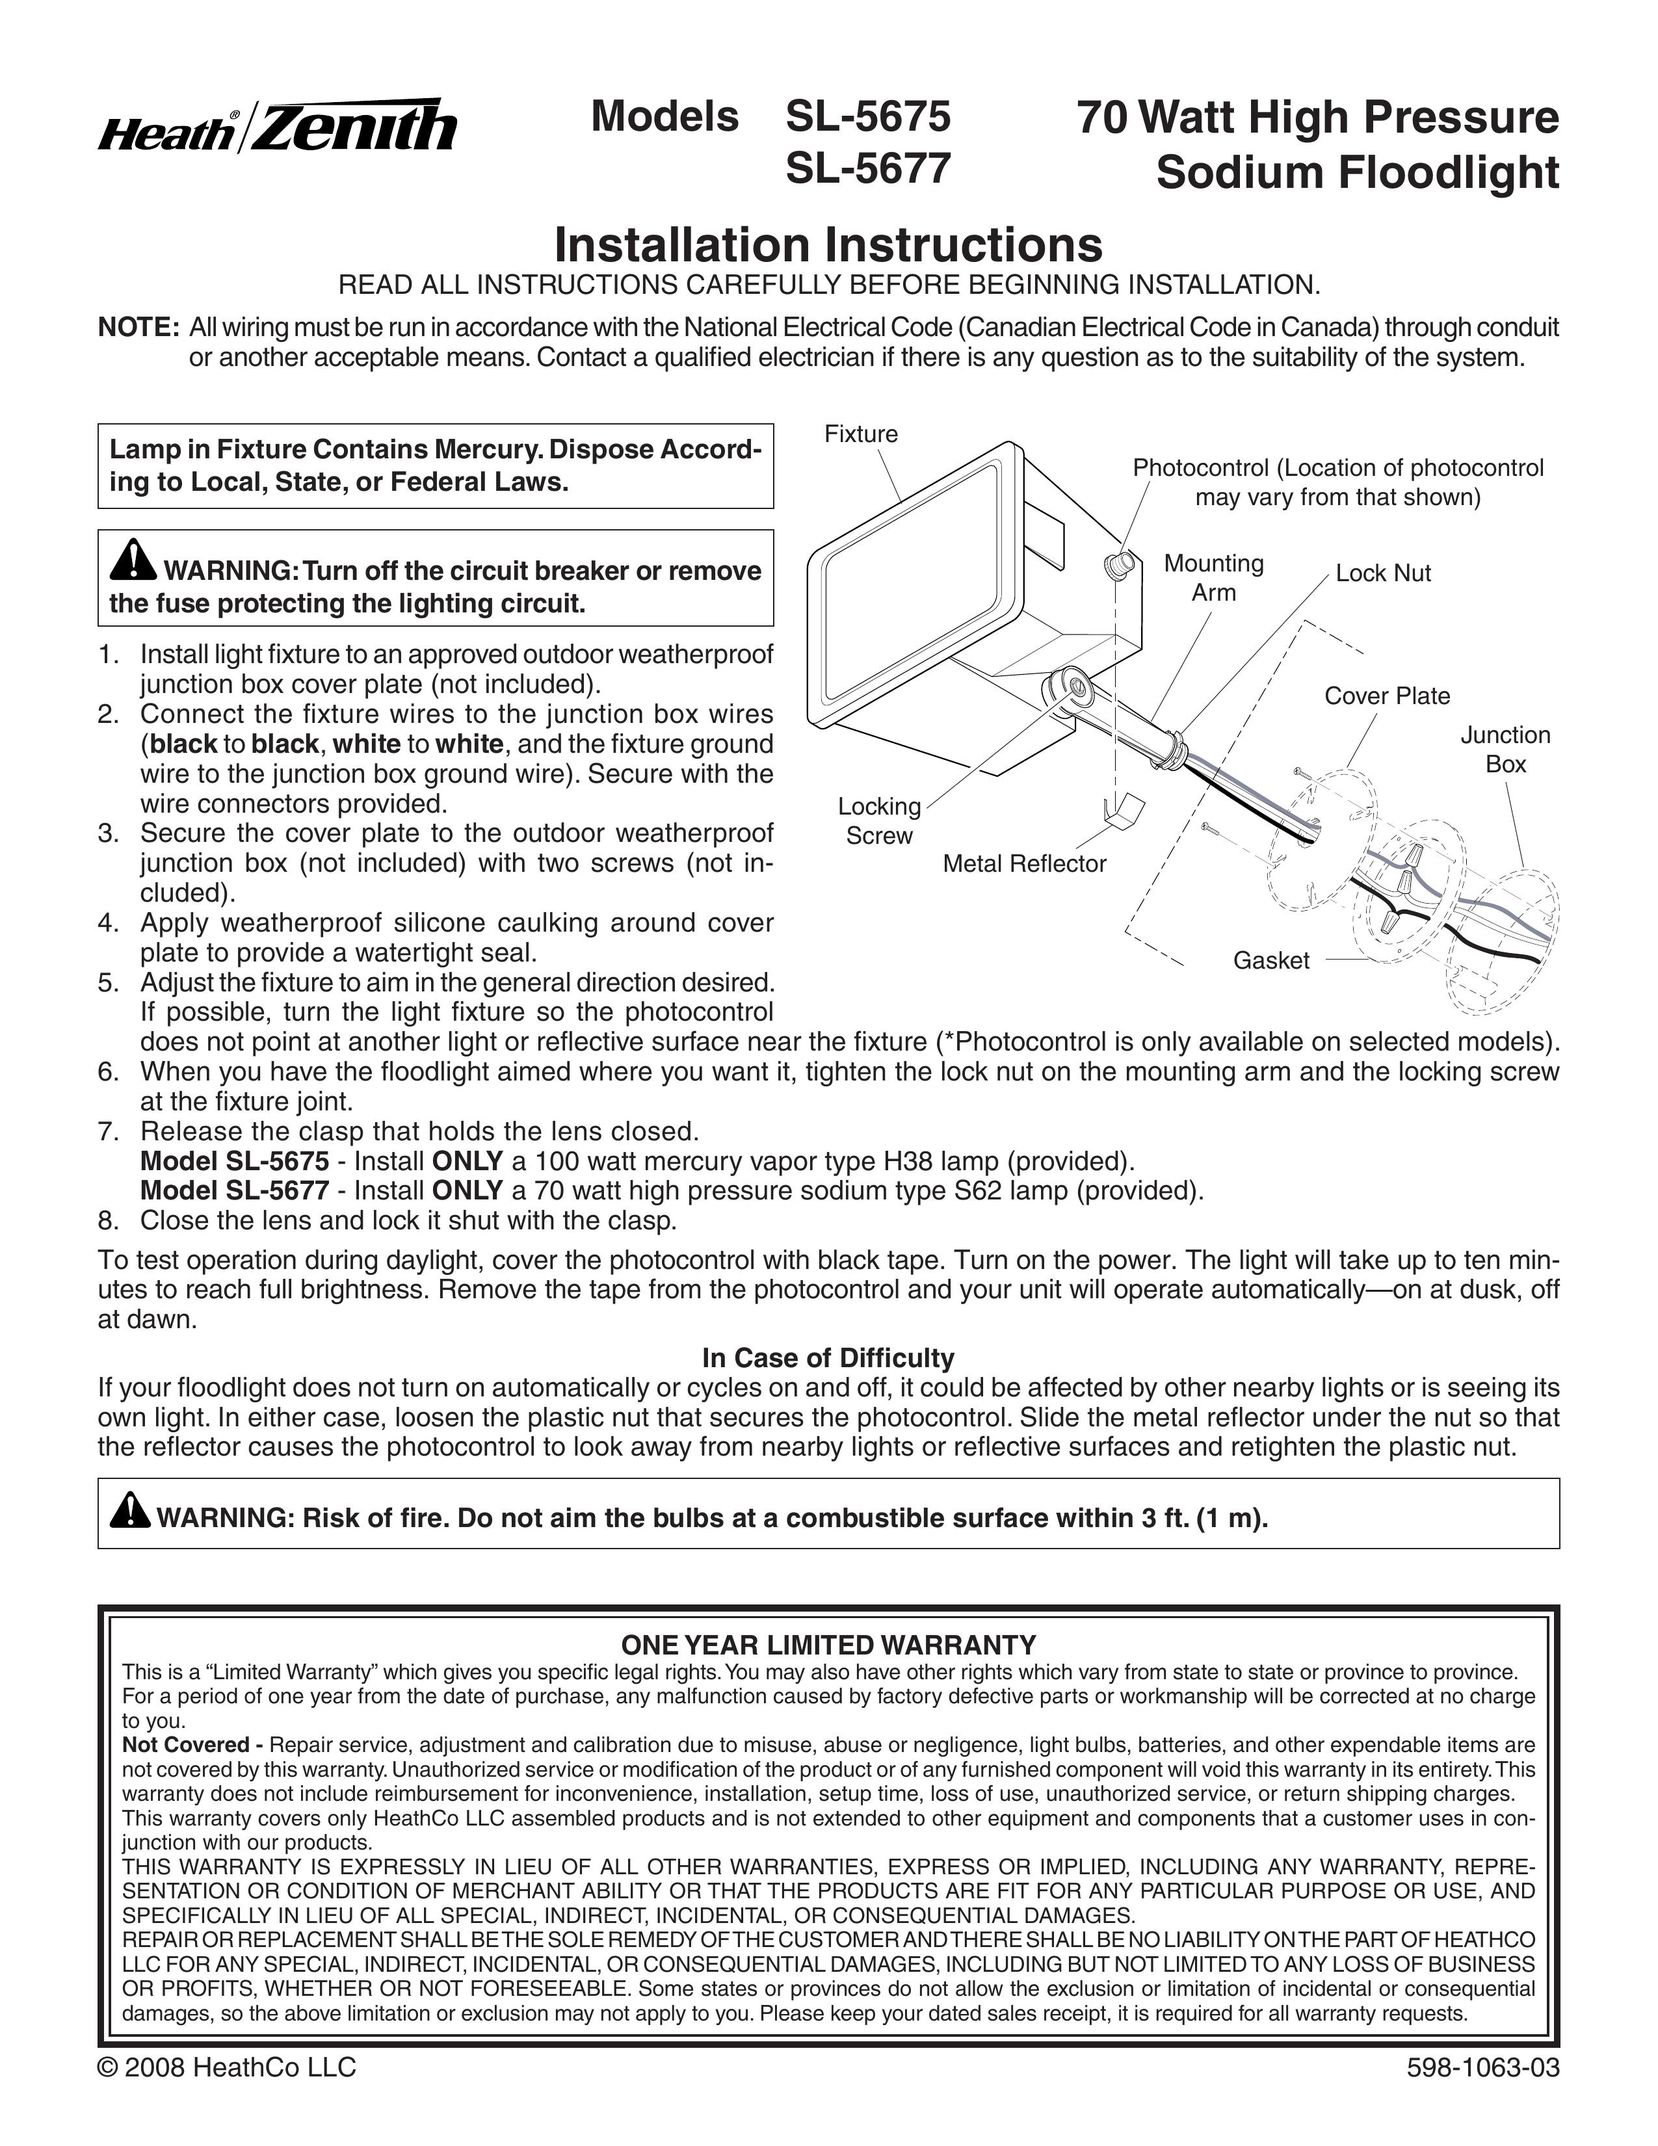 Heath Zenith SL-5675 Work Light User Manual